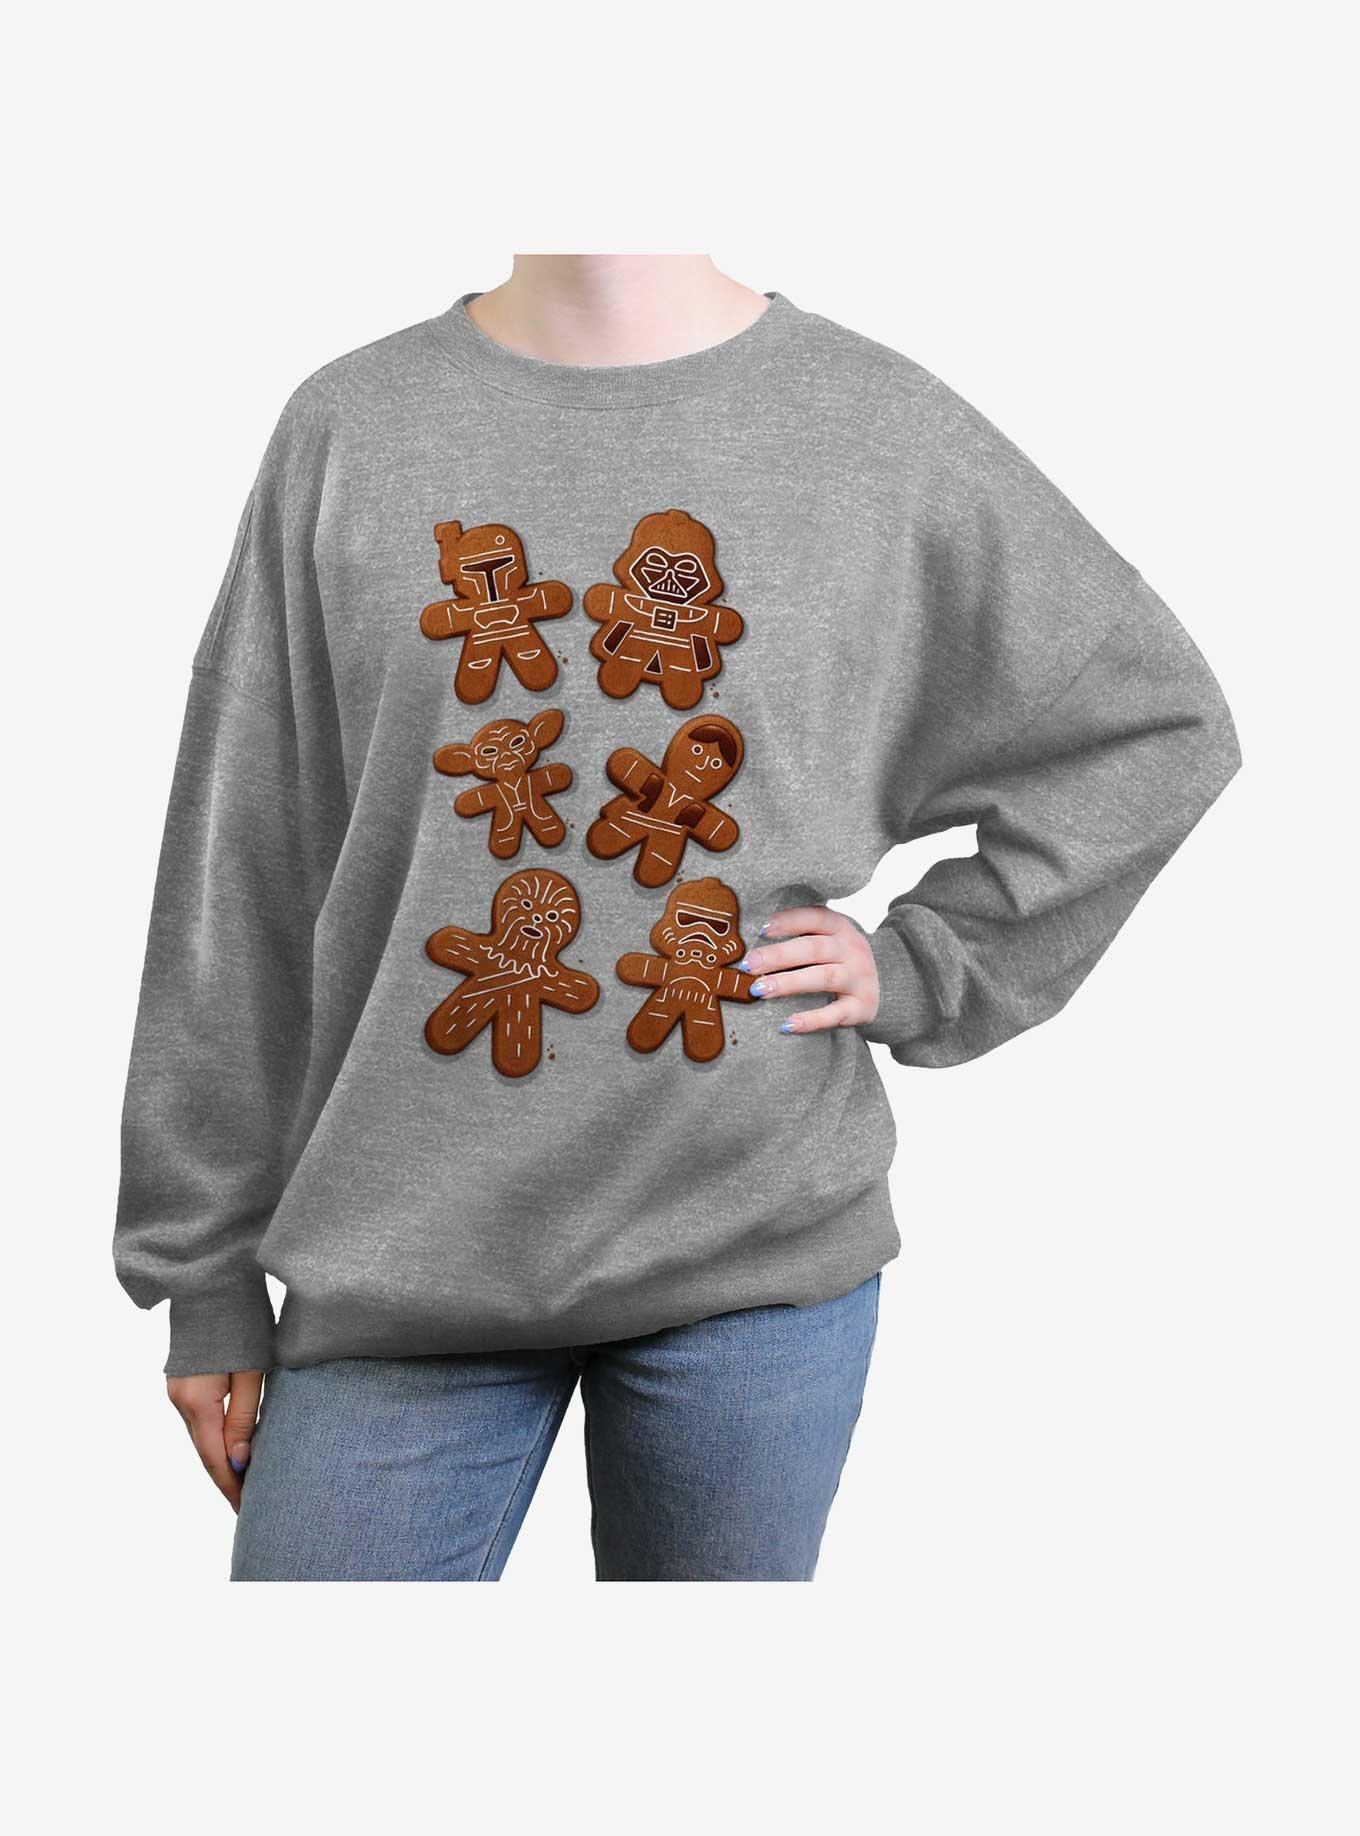 Star Wars Gingerbread Girls Oversized Sweatshirt